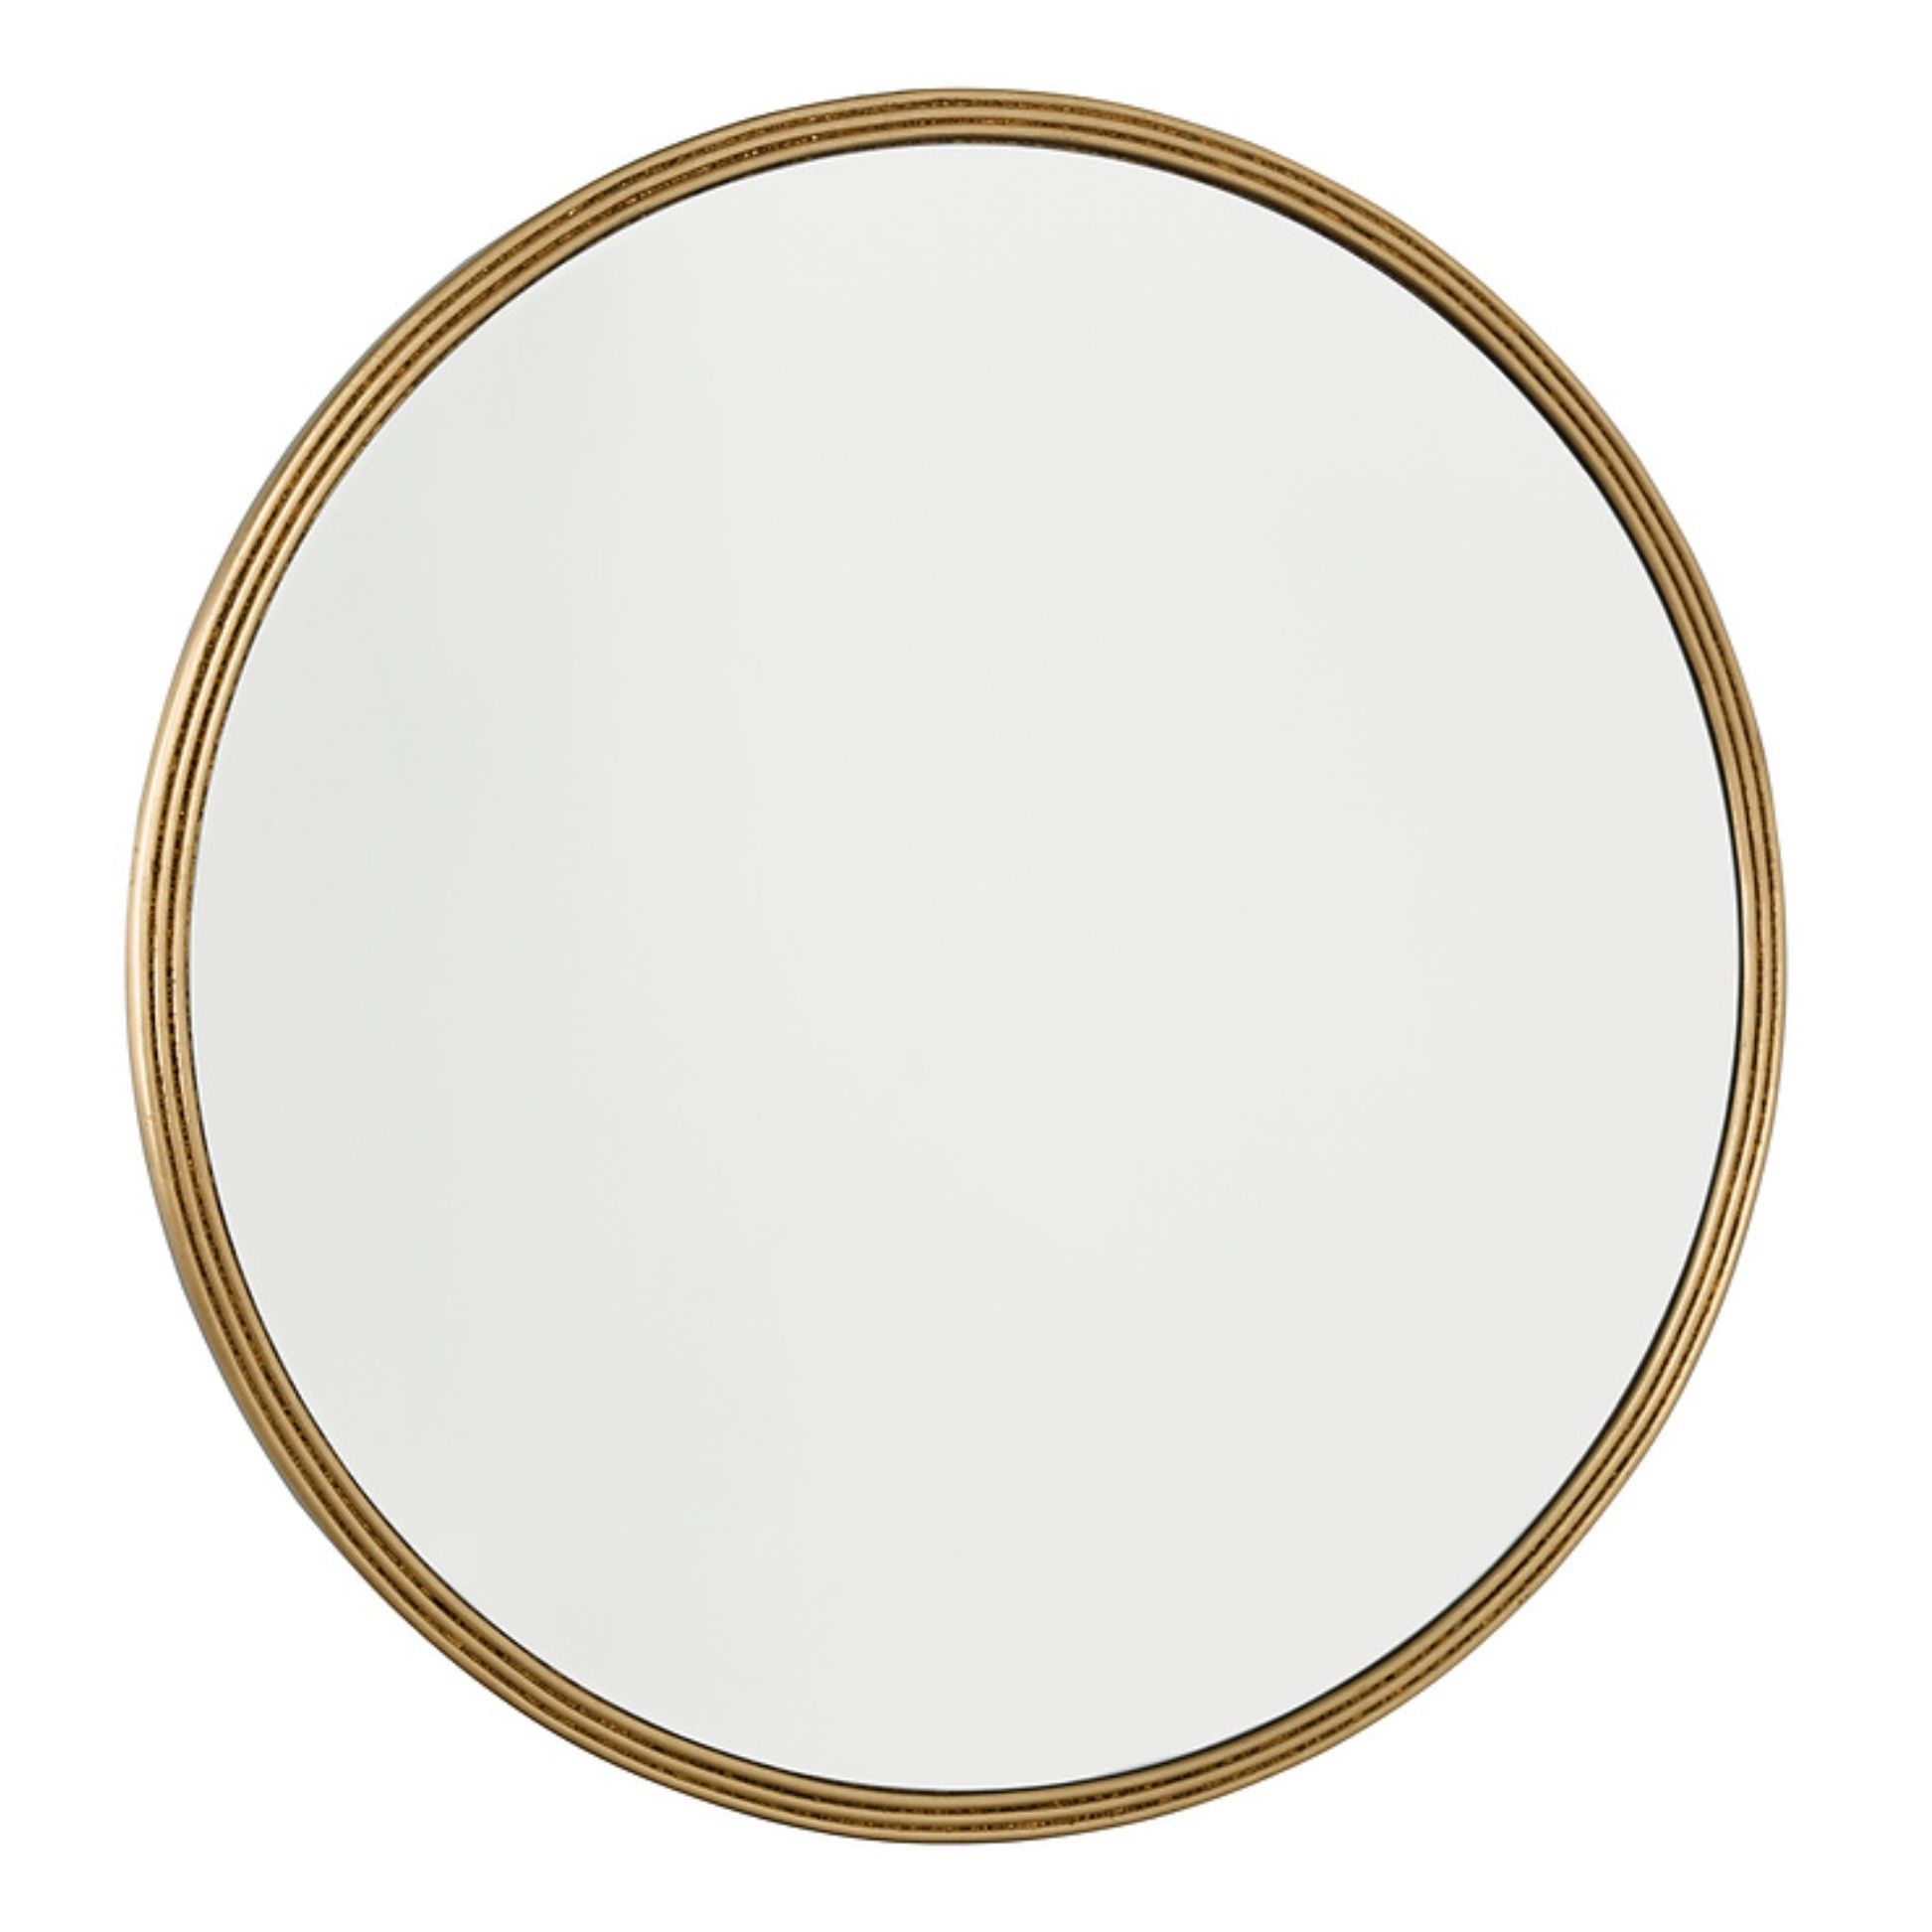 Briton – Beaded Edge Round Gold Mirror – Lightbox Within Round Beaded Trim Wall Mirrors (View 12 of 15)